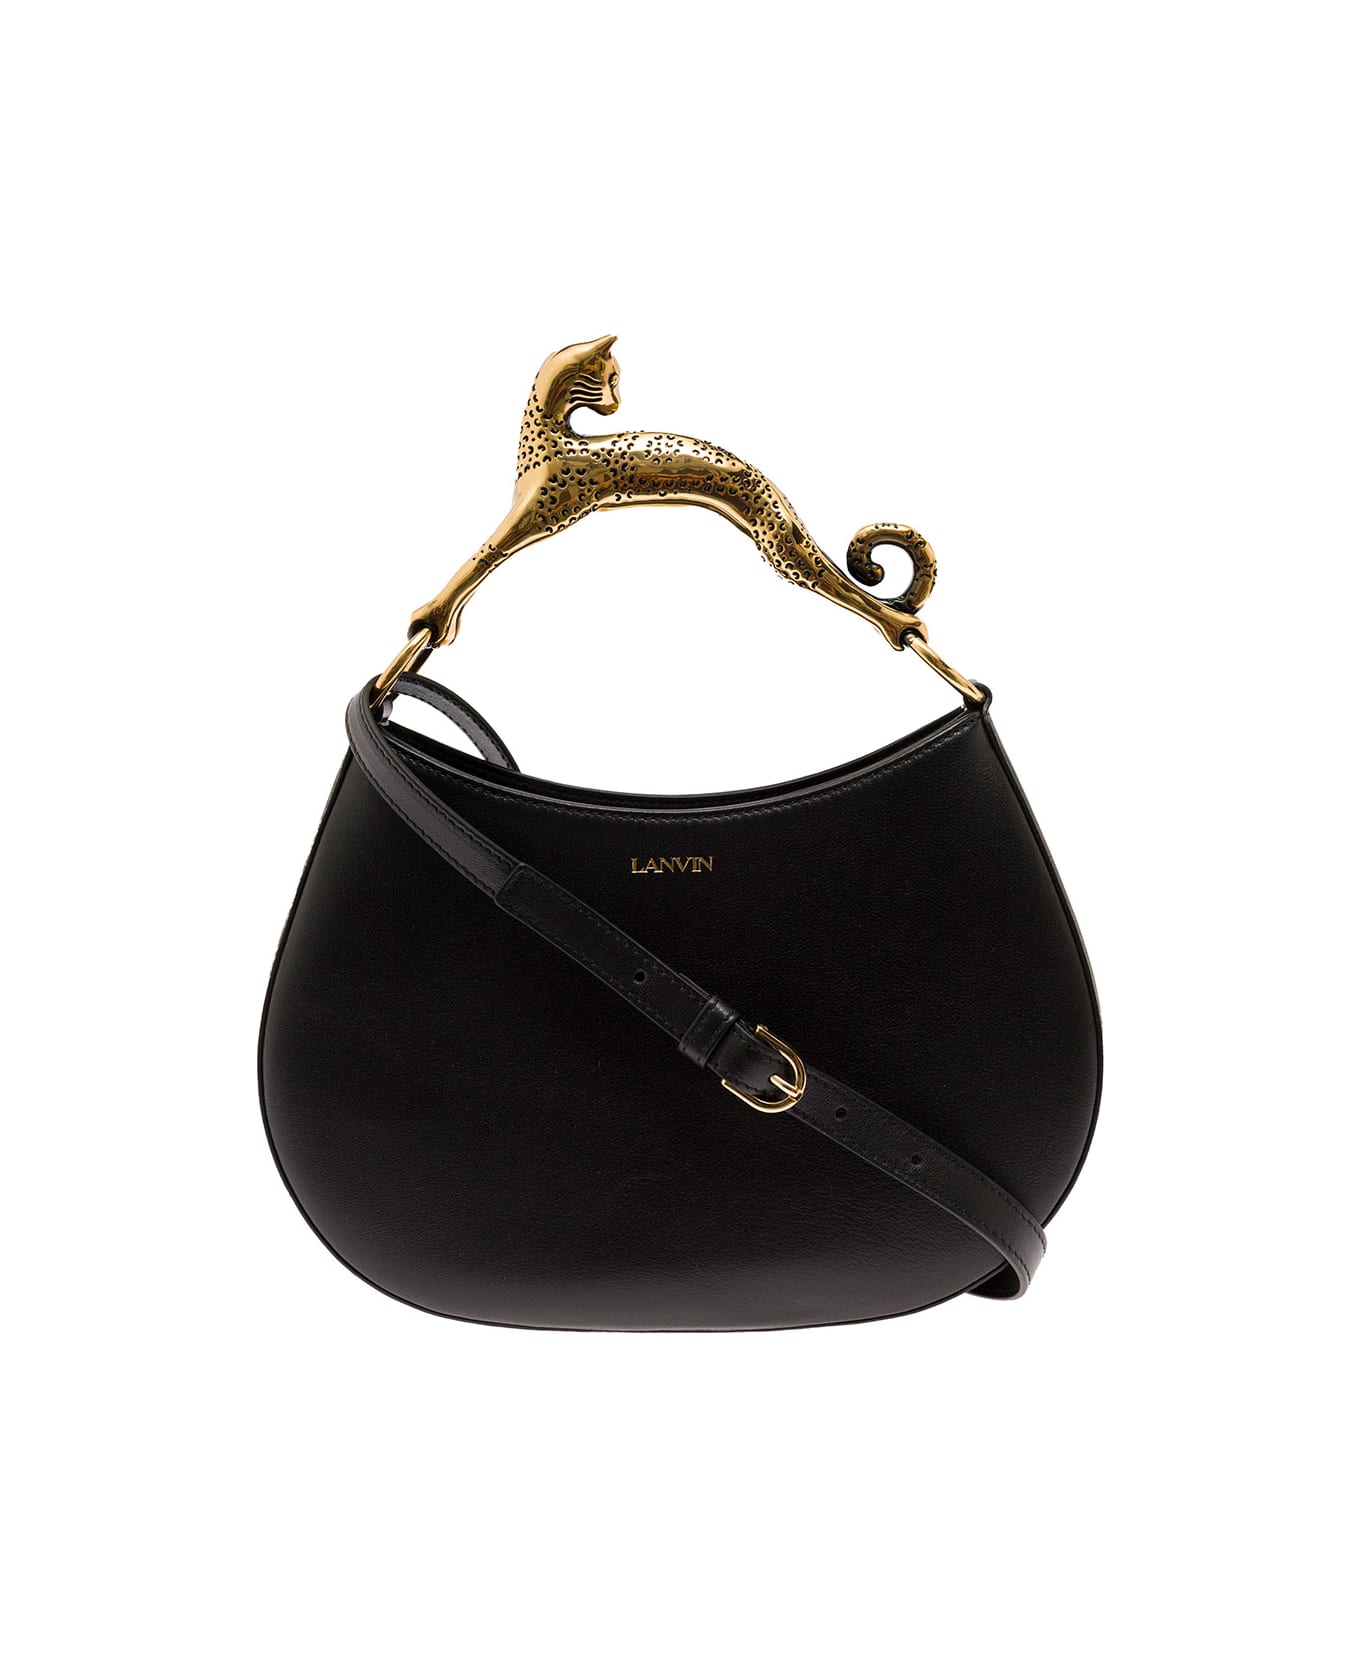 Lanvin Hobo Cat Black Leather Handbag Lanvin Woman - Black トートバッグ